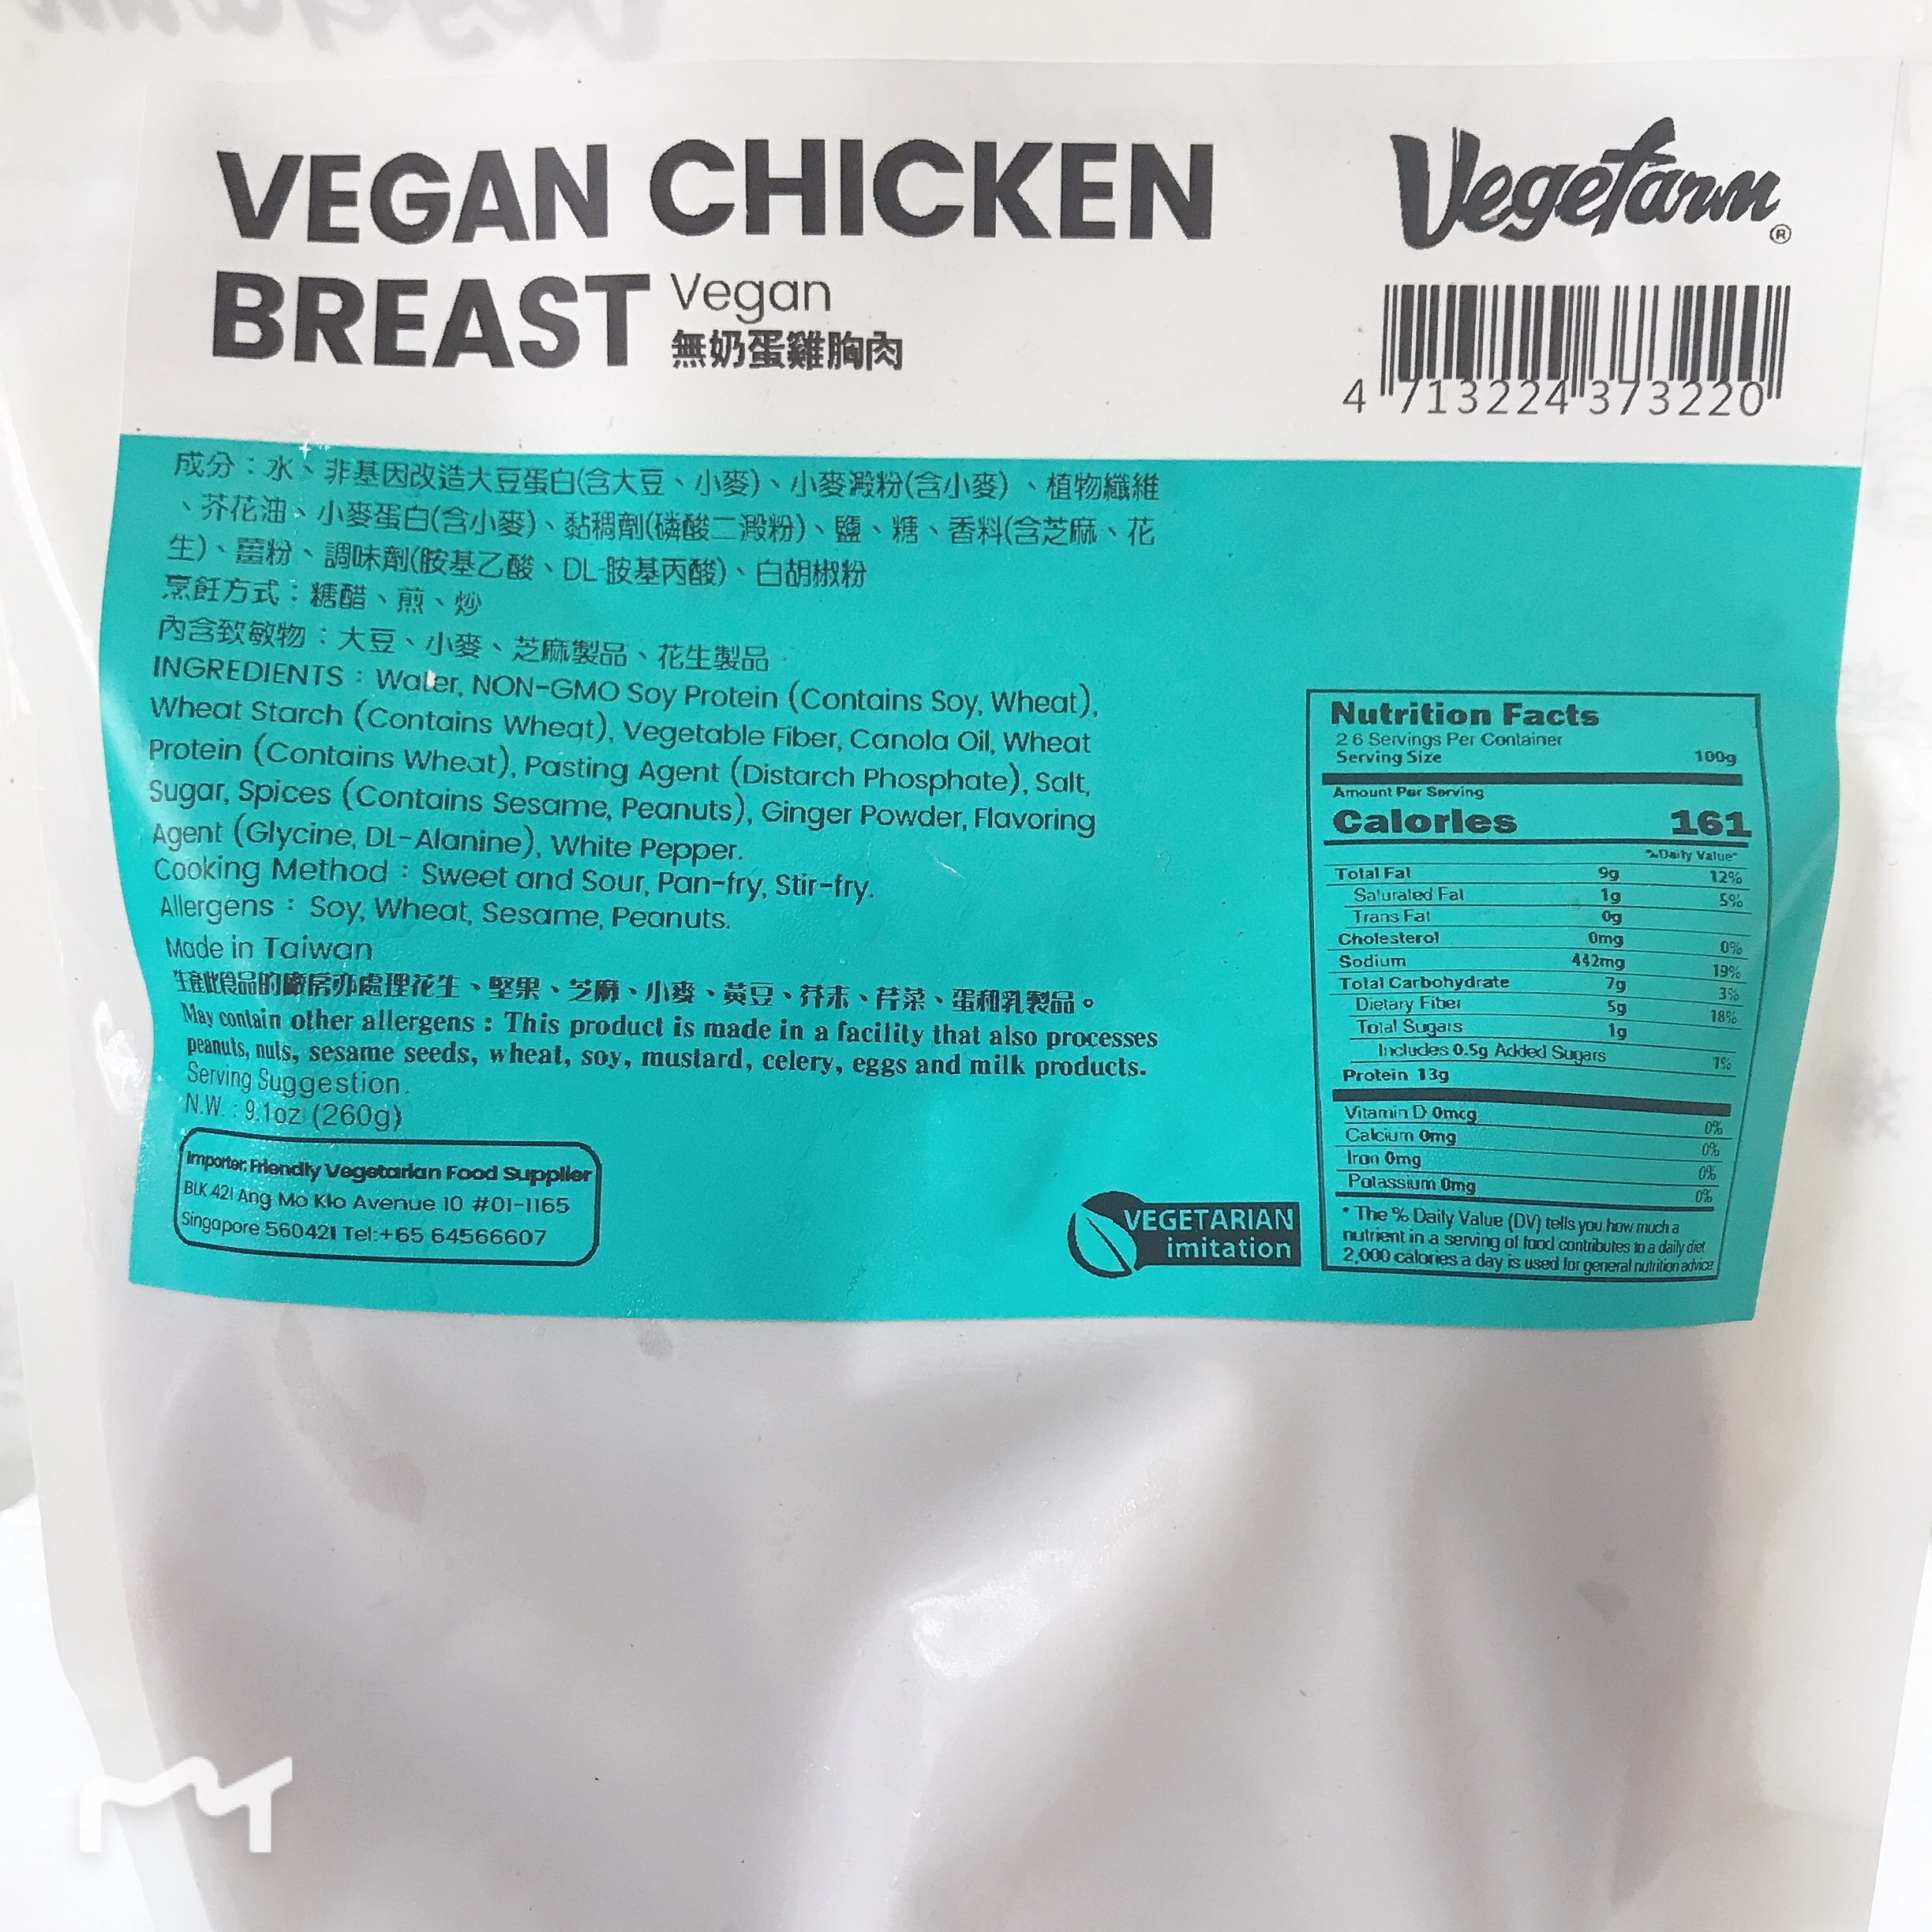 Image Vegefarm vegan Chicken Breast 松珍 - 无奶蛋鸡胸肉 260grams